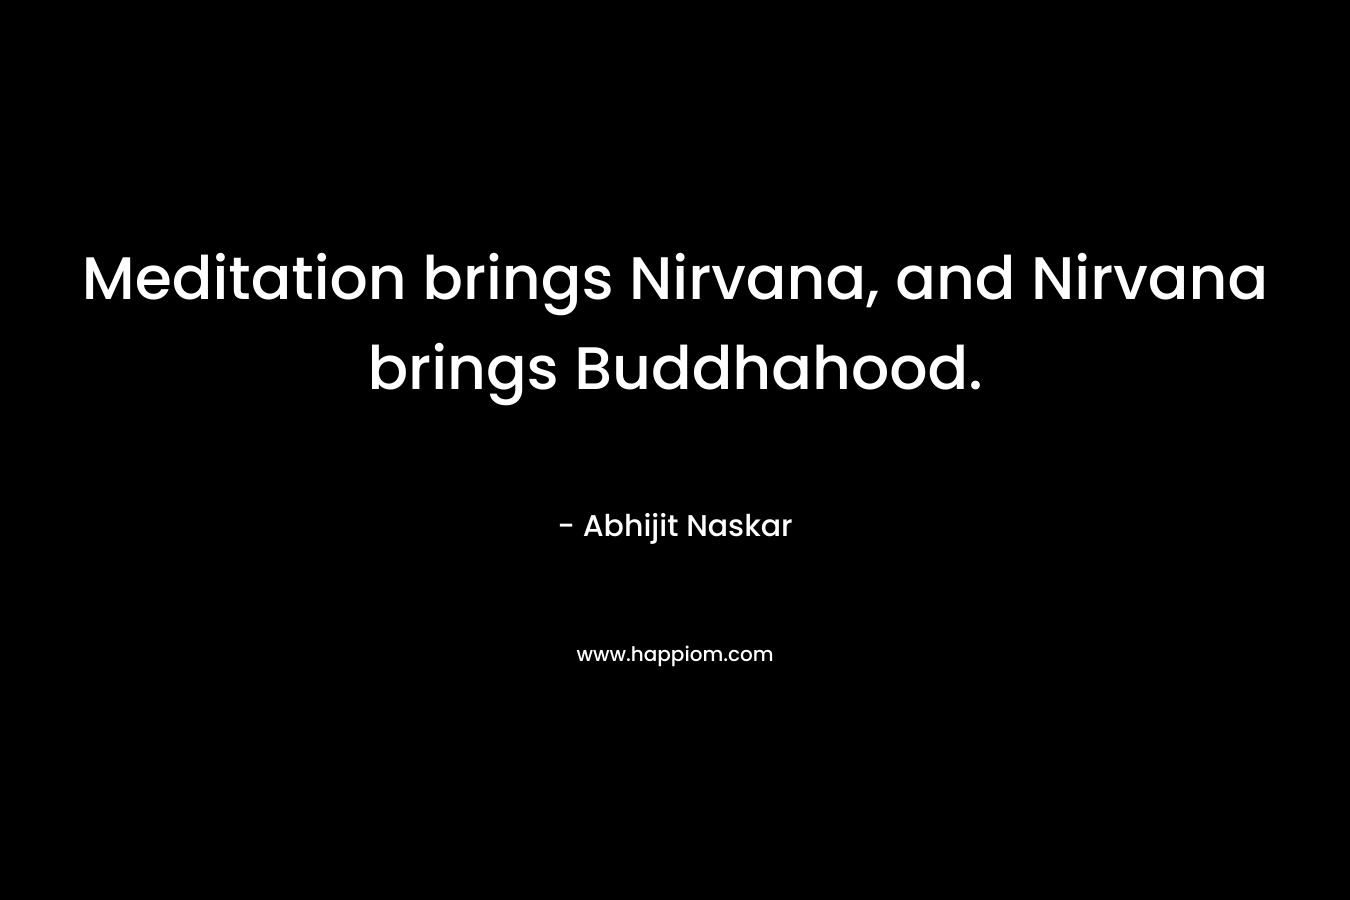 Meditation brings Nirvana, and Nirvana brings Buddhahood.